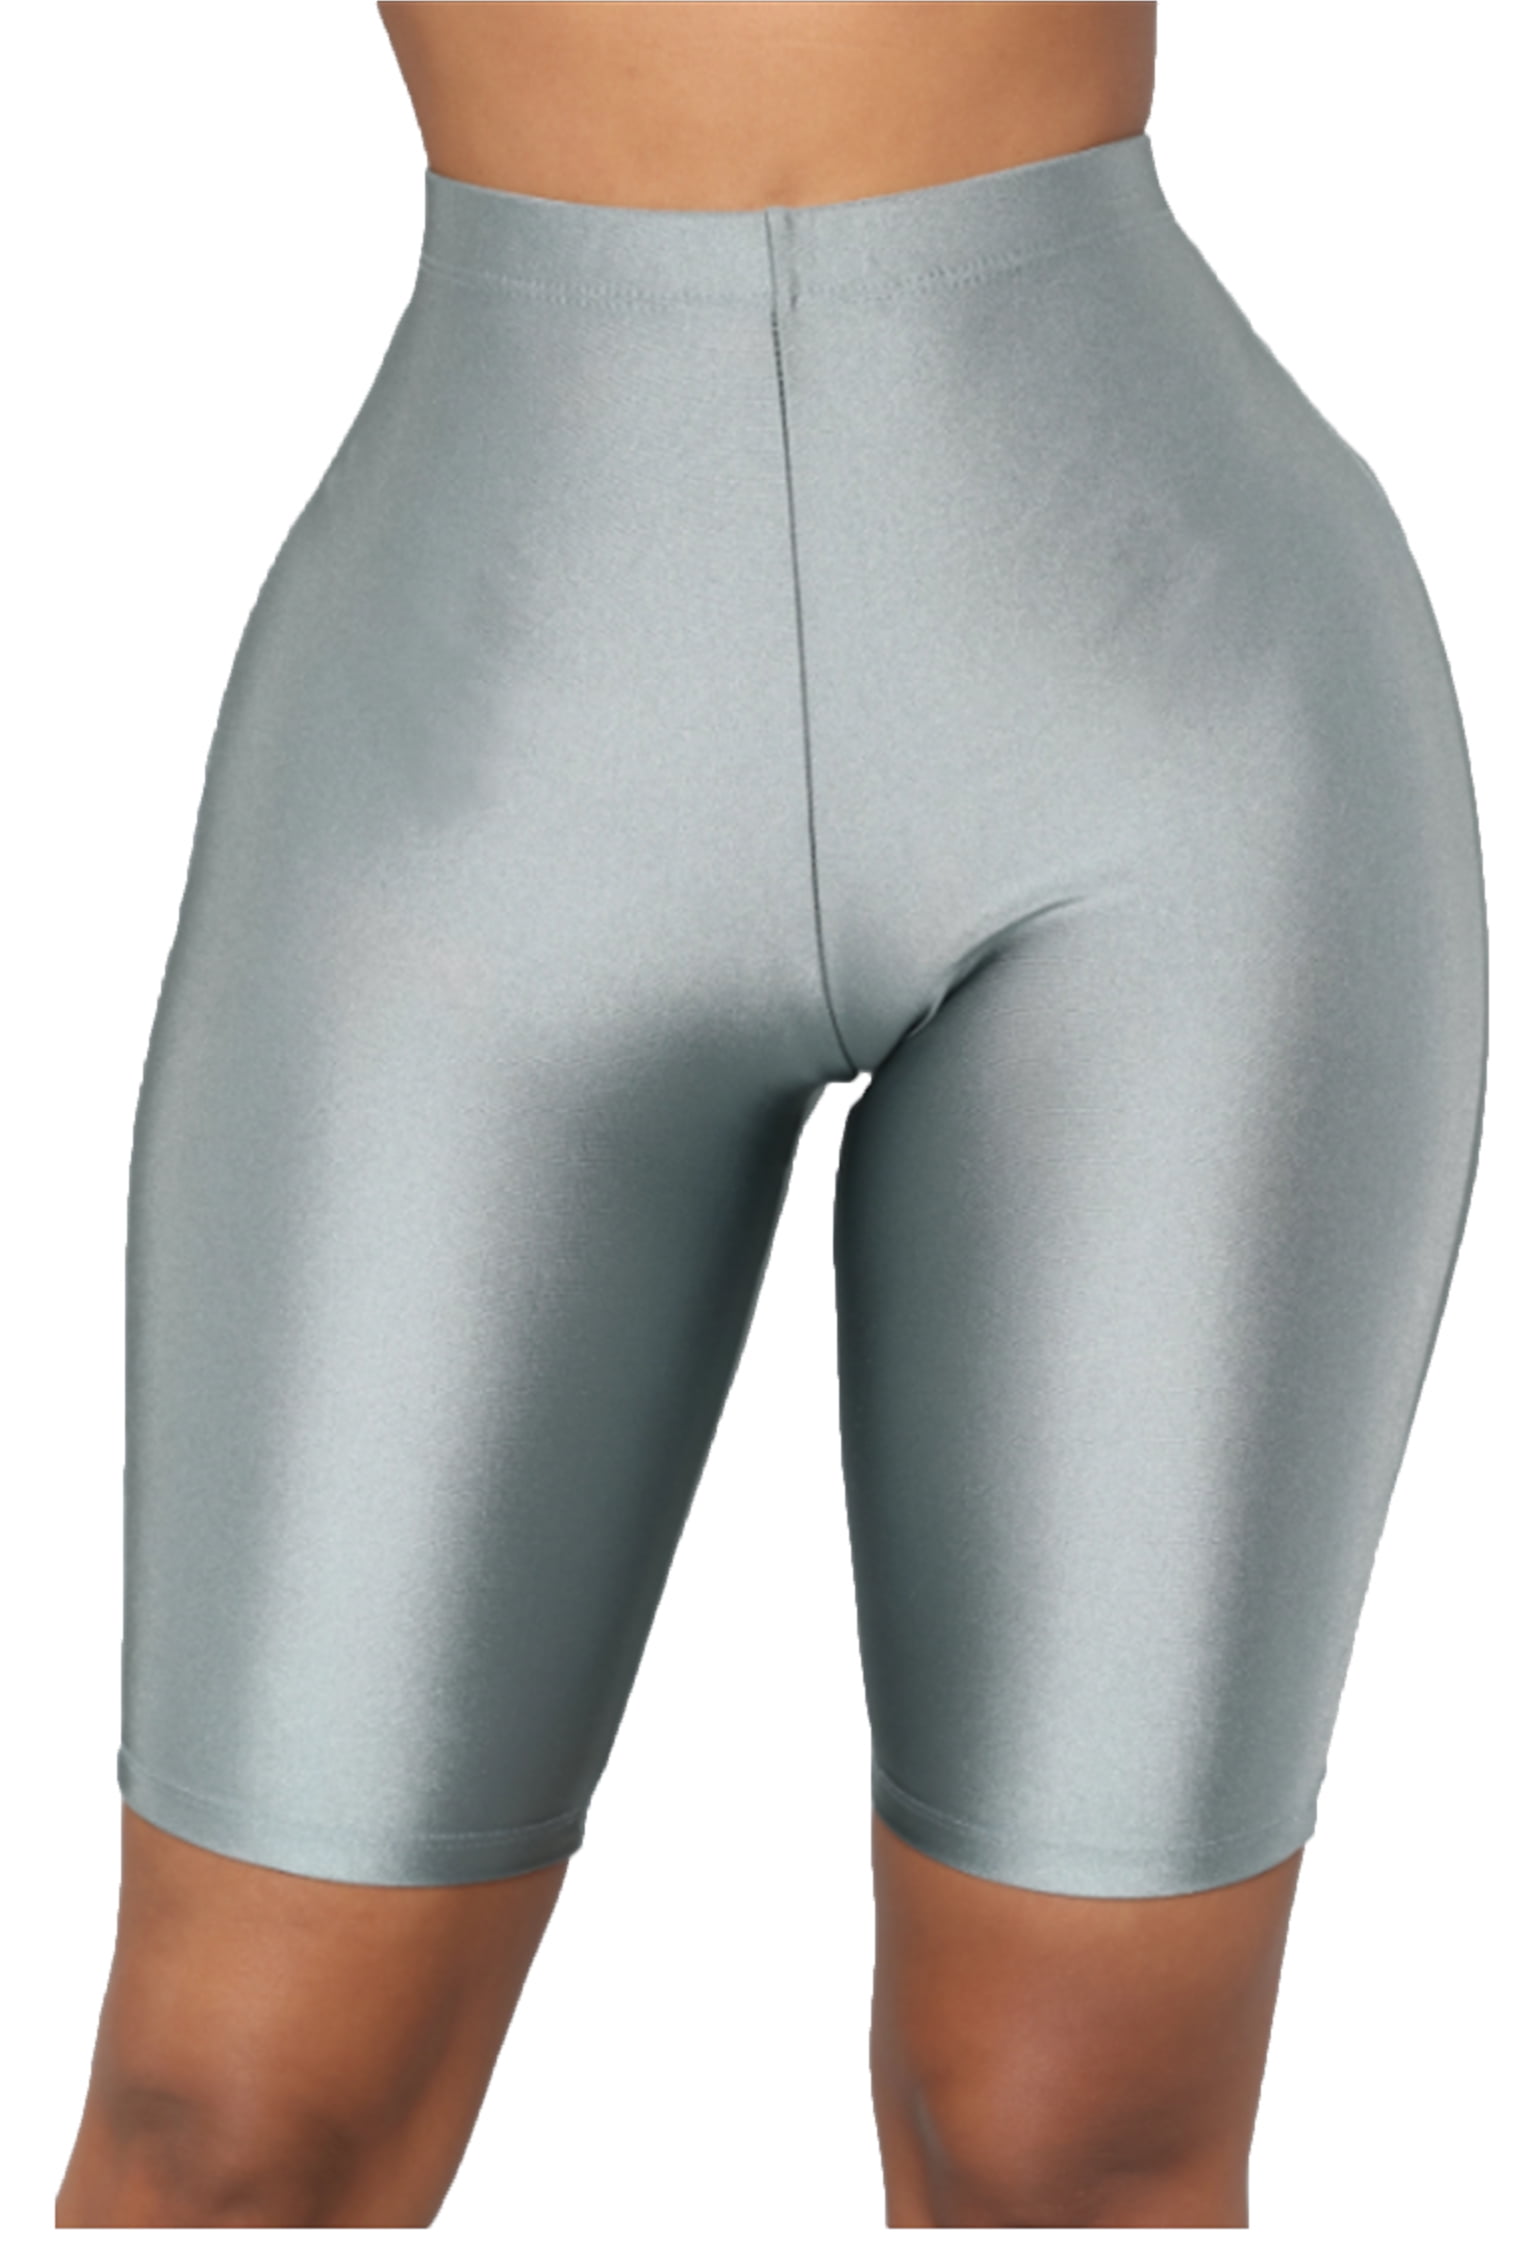 Womens Hot Pants Gym Yoga Shorts Cycle Dance Sports Fitness Stretch Leggings UK 